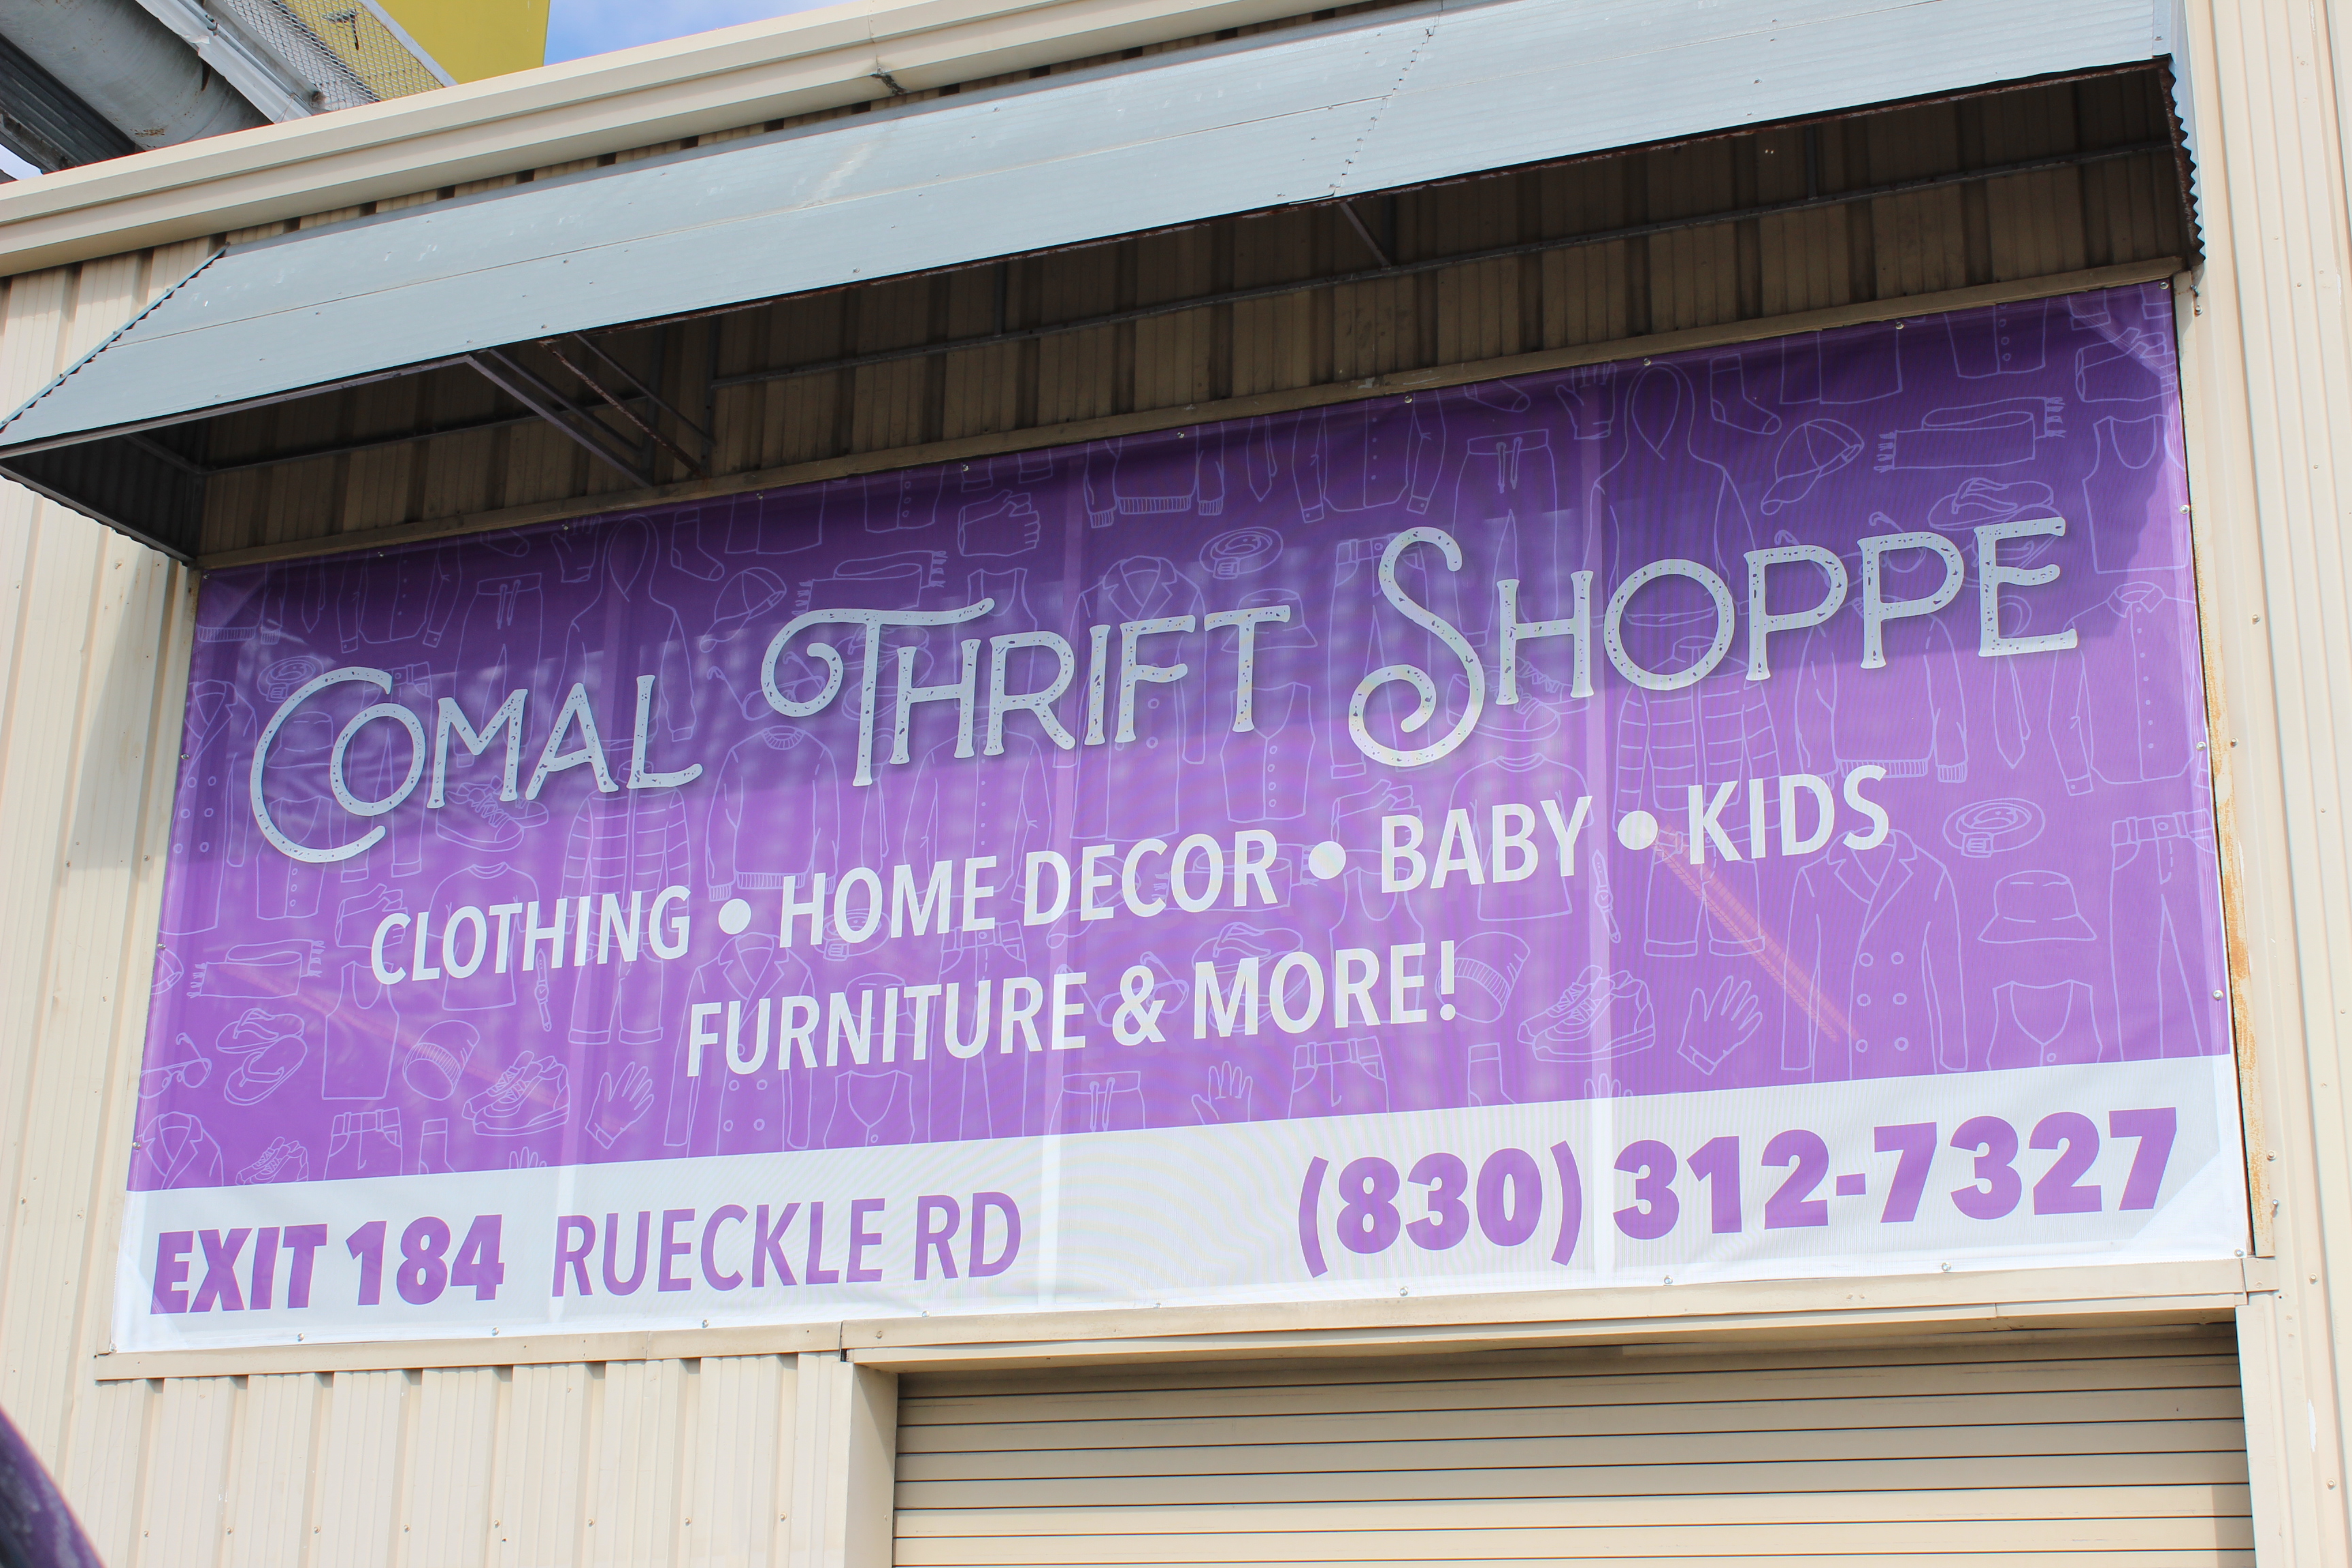 Comal thrift Shoppe II